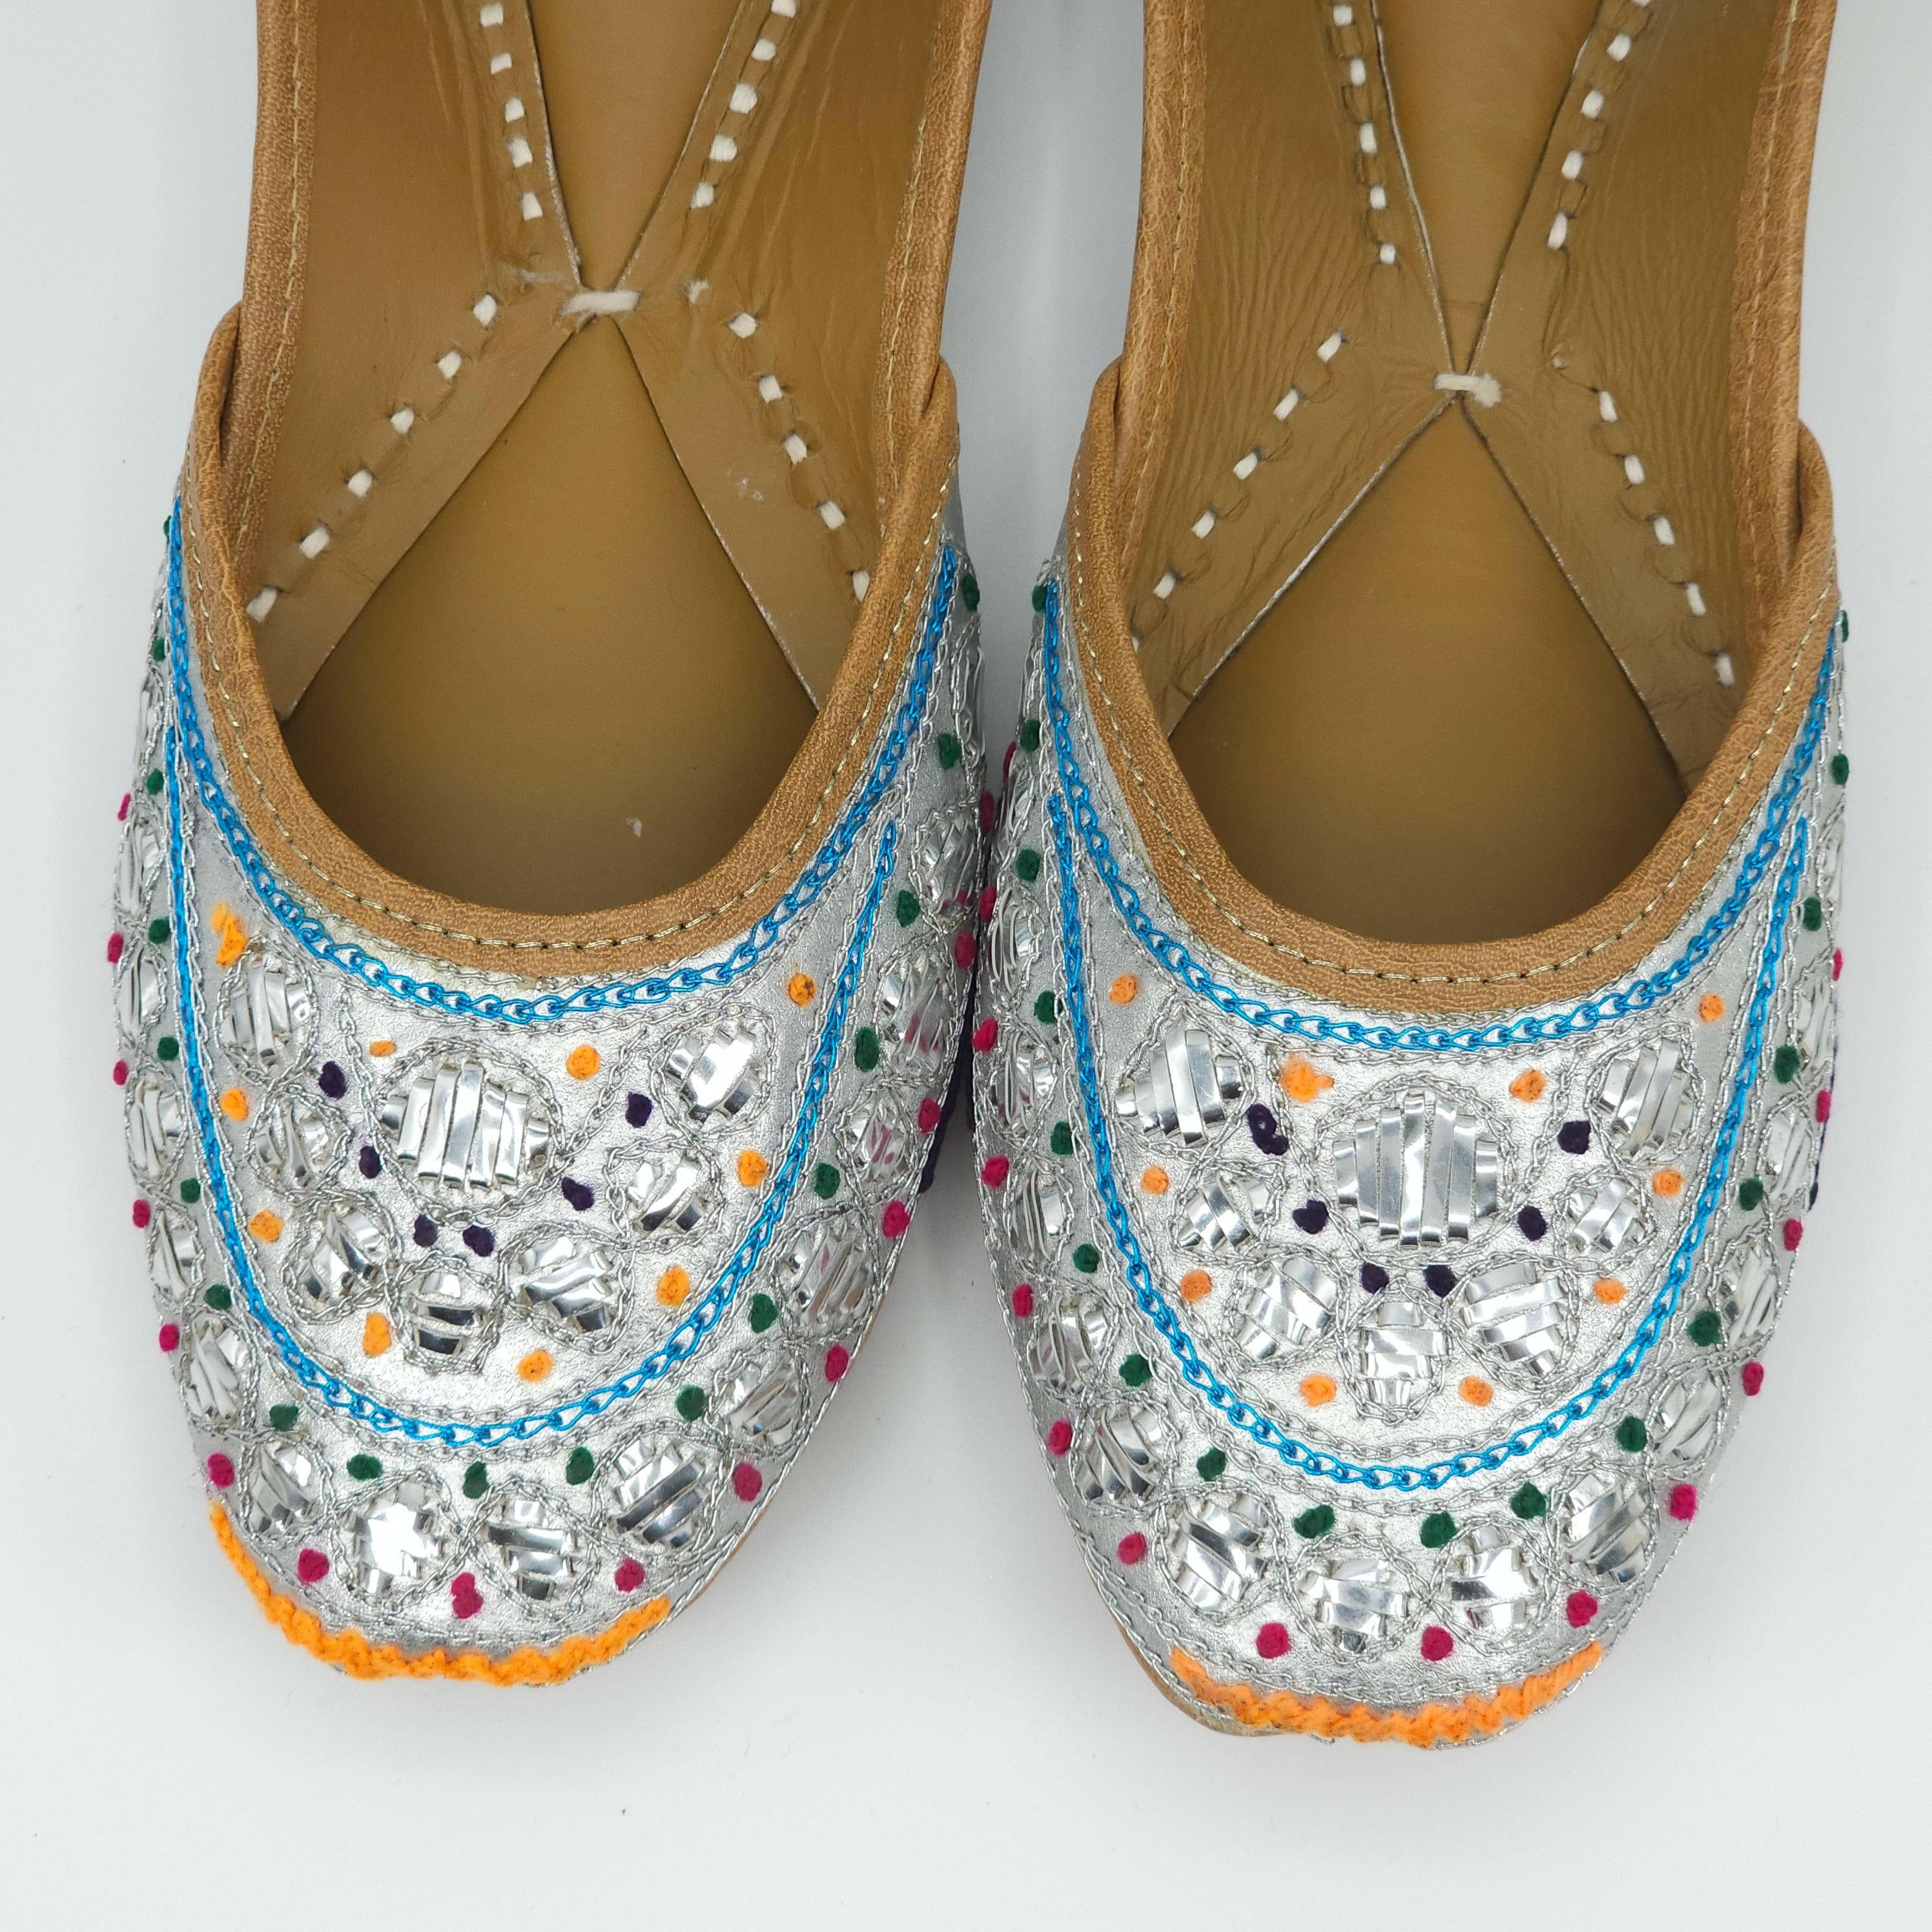 fancy fab Jewels juttis Thiea - Silver Foil work leather Ballerina Jutti Shoes